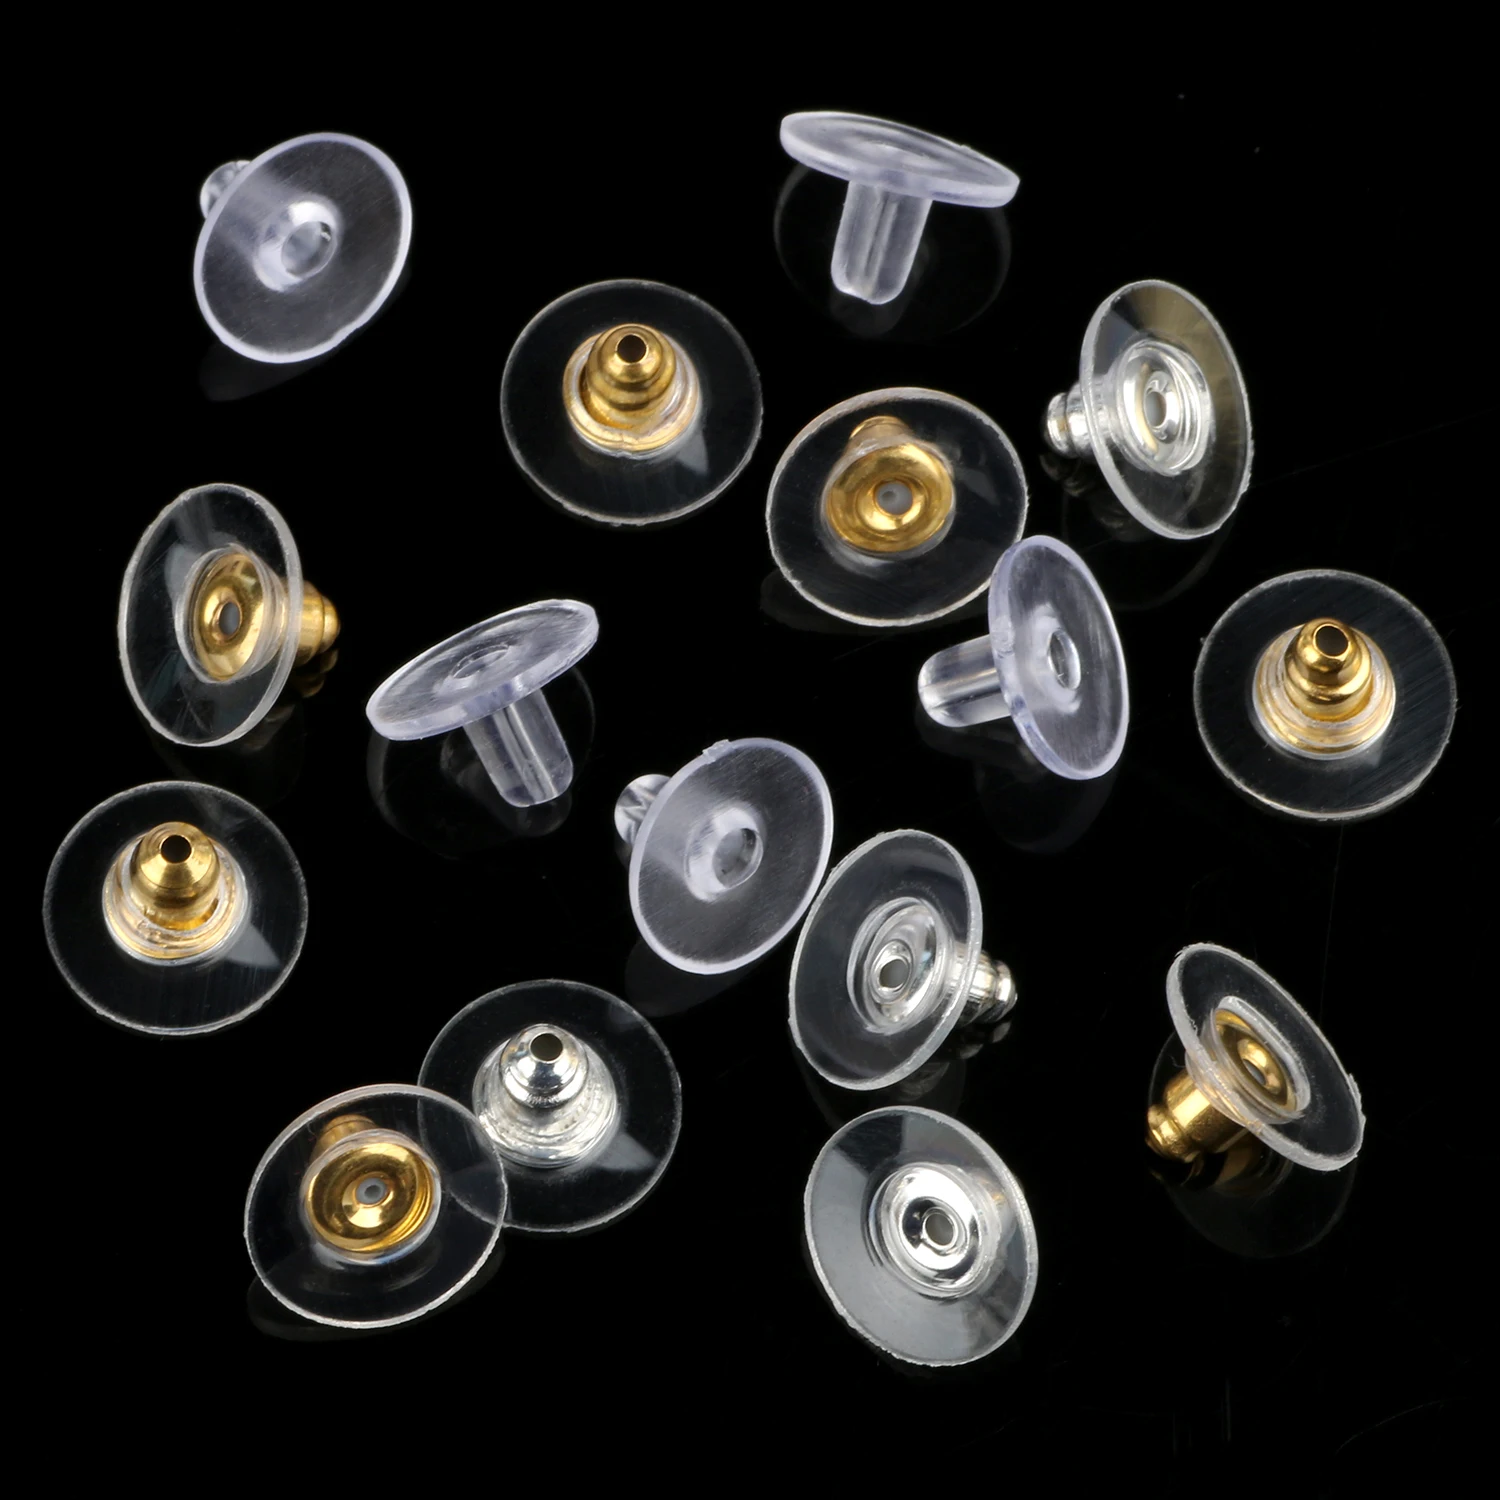 

100/200pcs Rubber Earring Backs Stopper Earnuts Stud Earring Back Supplies For Jewelry DIY Jewelry Findings Making Accessories